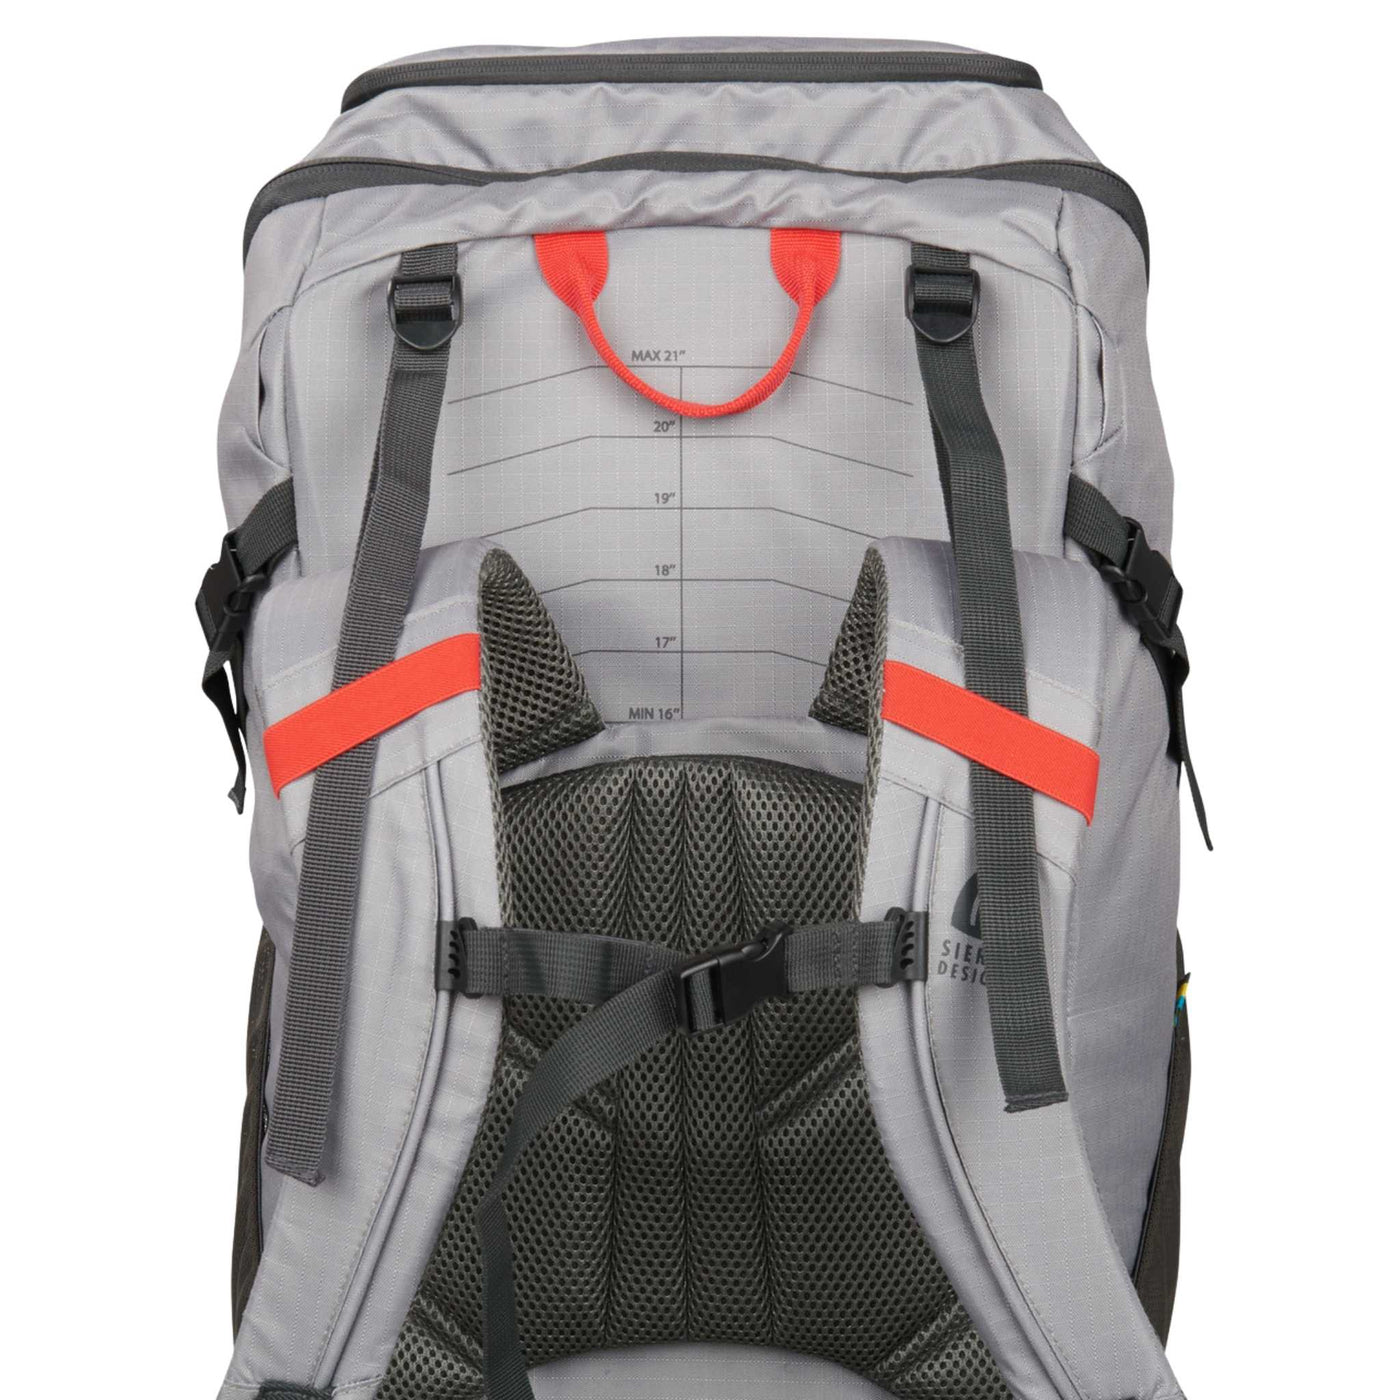 Sierra Designs Gigawatt 60L Pack | Hiking & Tramping Backpack NZ | Further Faster Christchurch NZ #grey